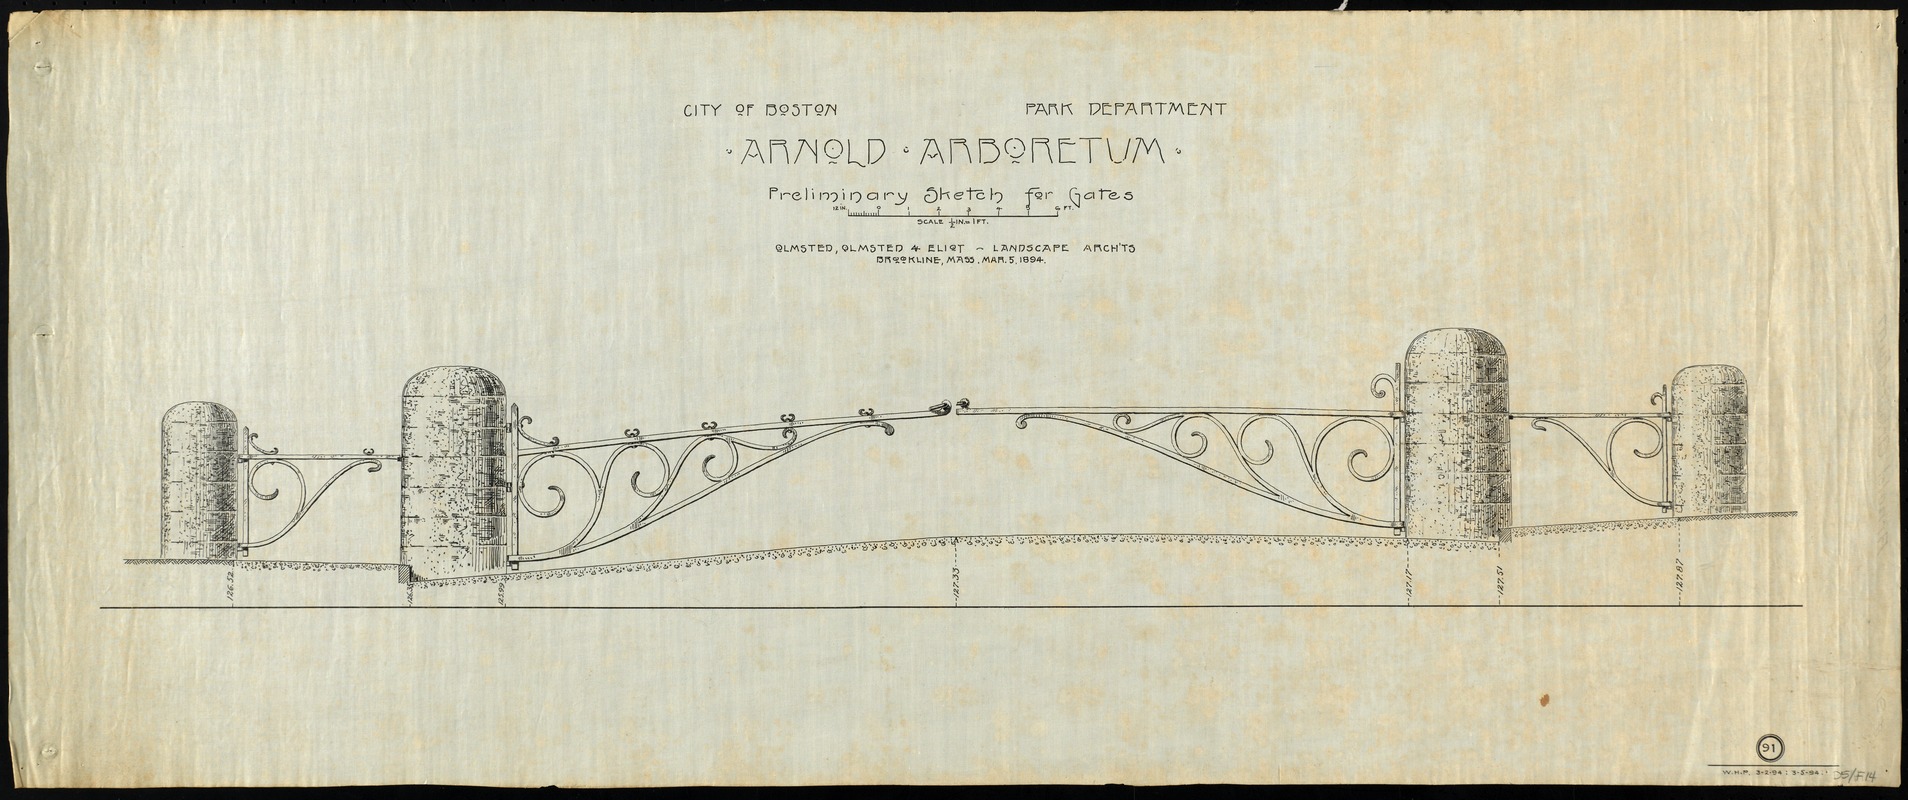 Arnold Arboretum: preliminary sketch for gates